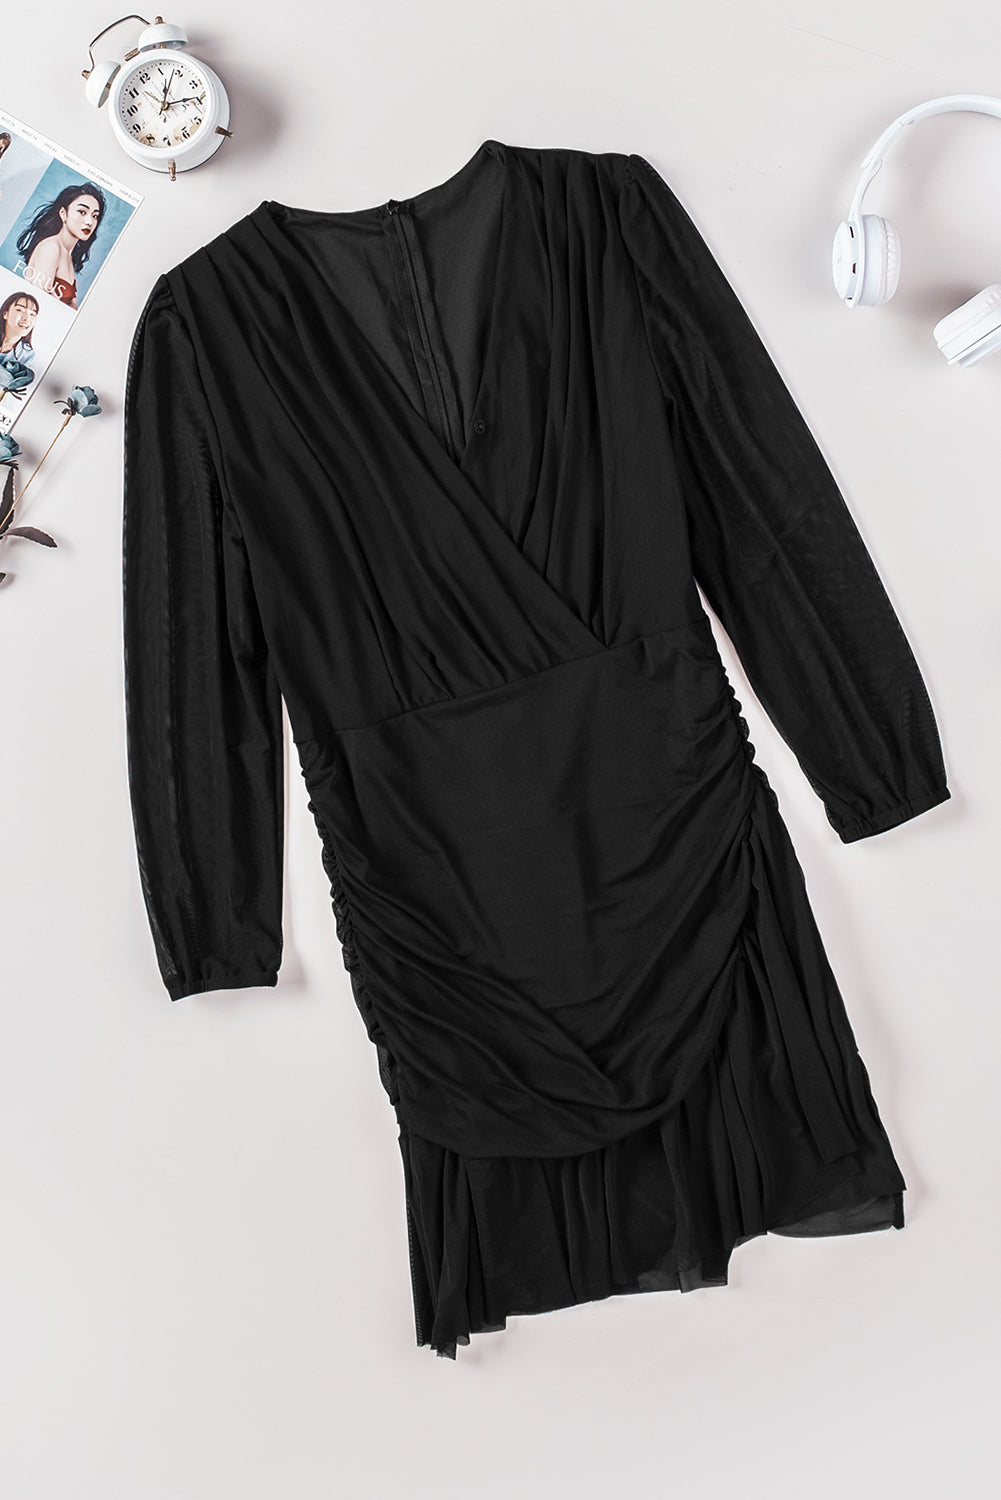 Black Ruched Sexy Dress Flounce V Neck Bodycon Mini Dress LC2211387-2